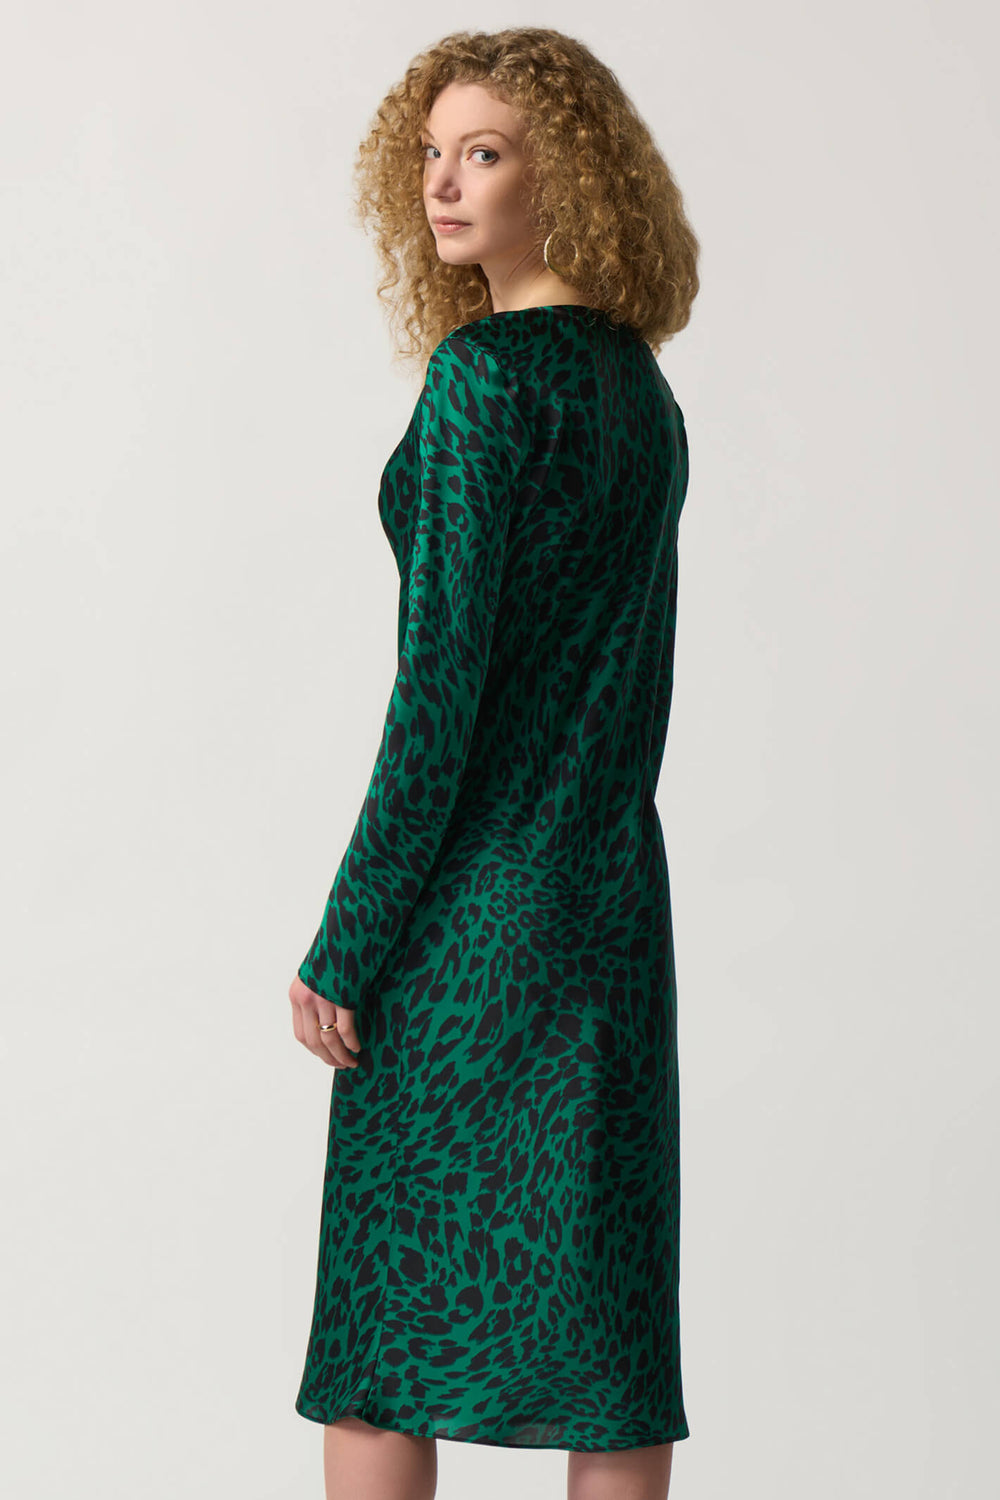 Joseph Ribkoff 233115 Emerald Green Leopard Print Satin Dress - Experience Boutique